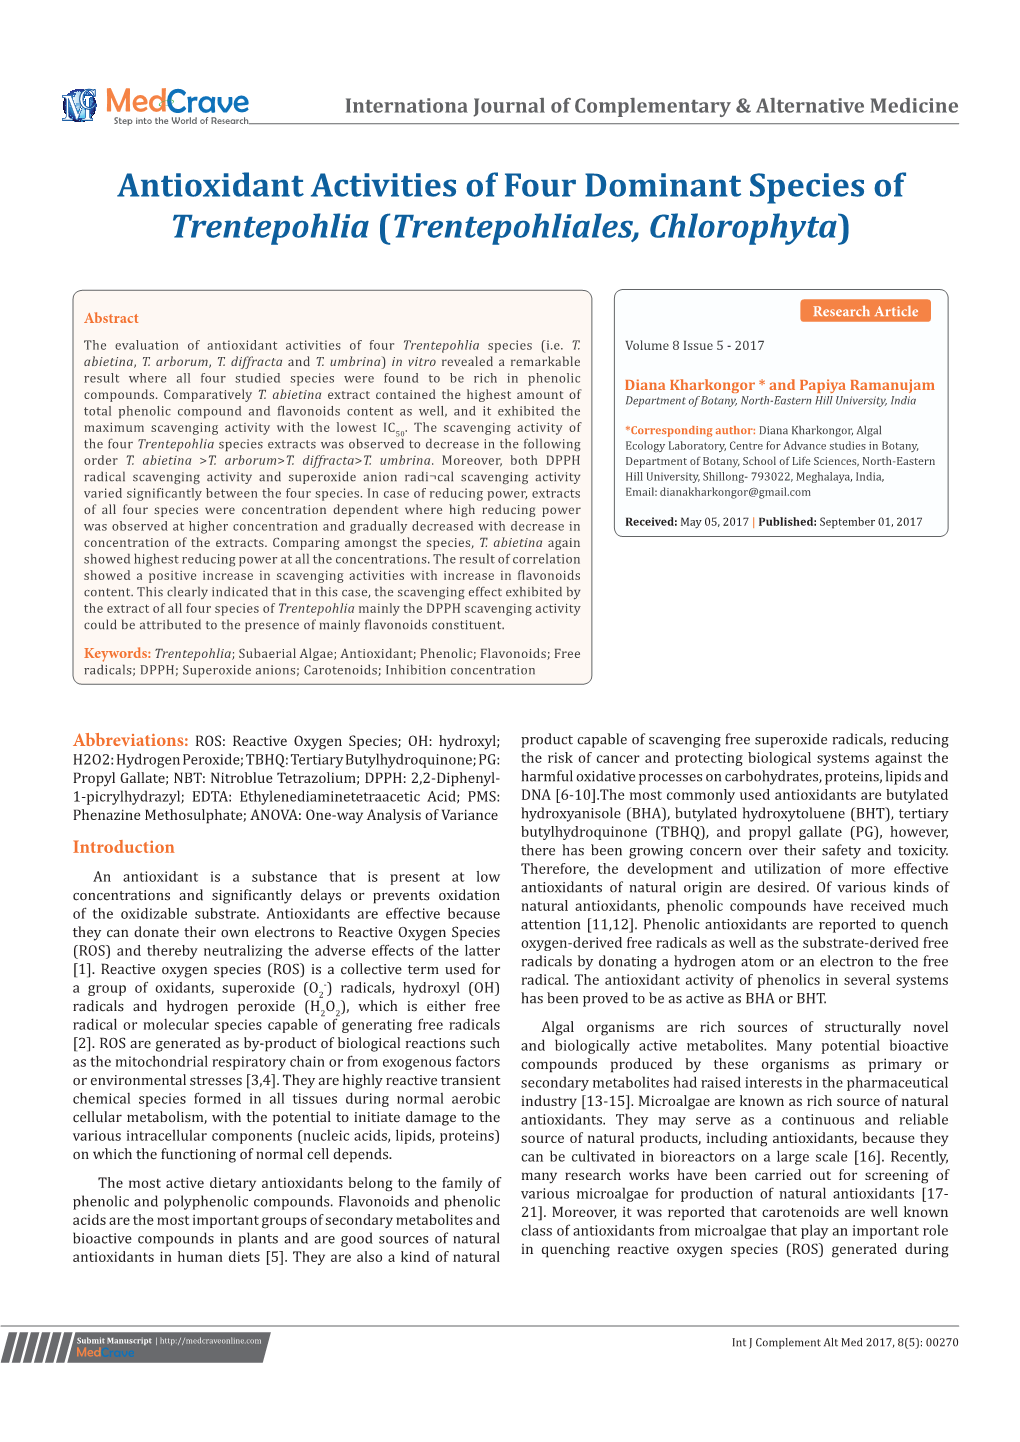 Antioxidant Activities of Four Dominant Species of Trentepohlia (Trentepohliales, Chlorophyta)